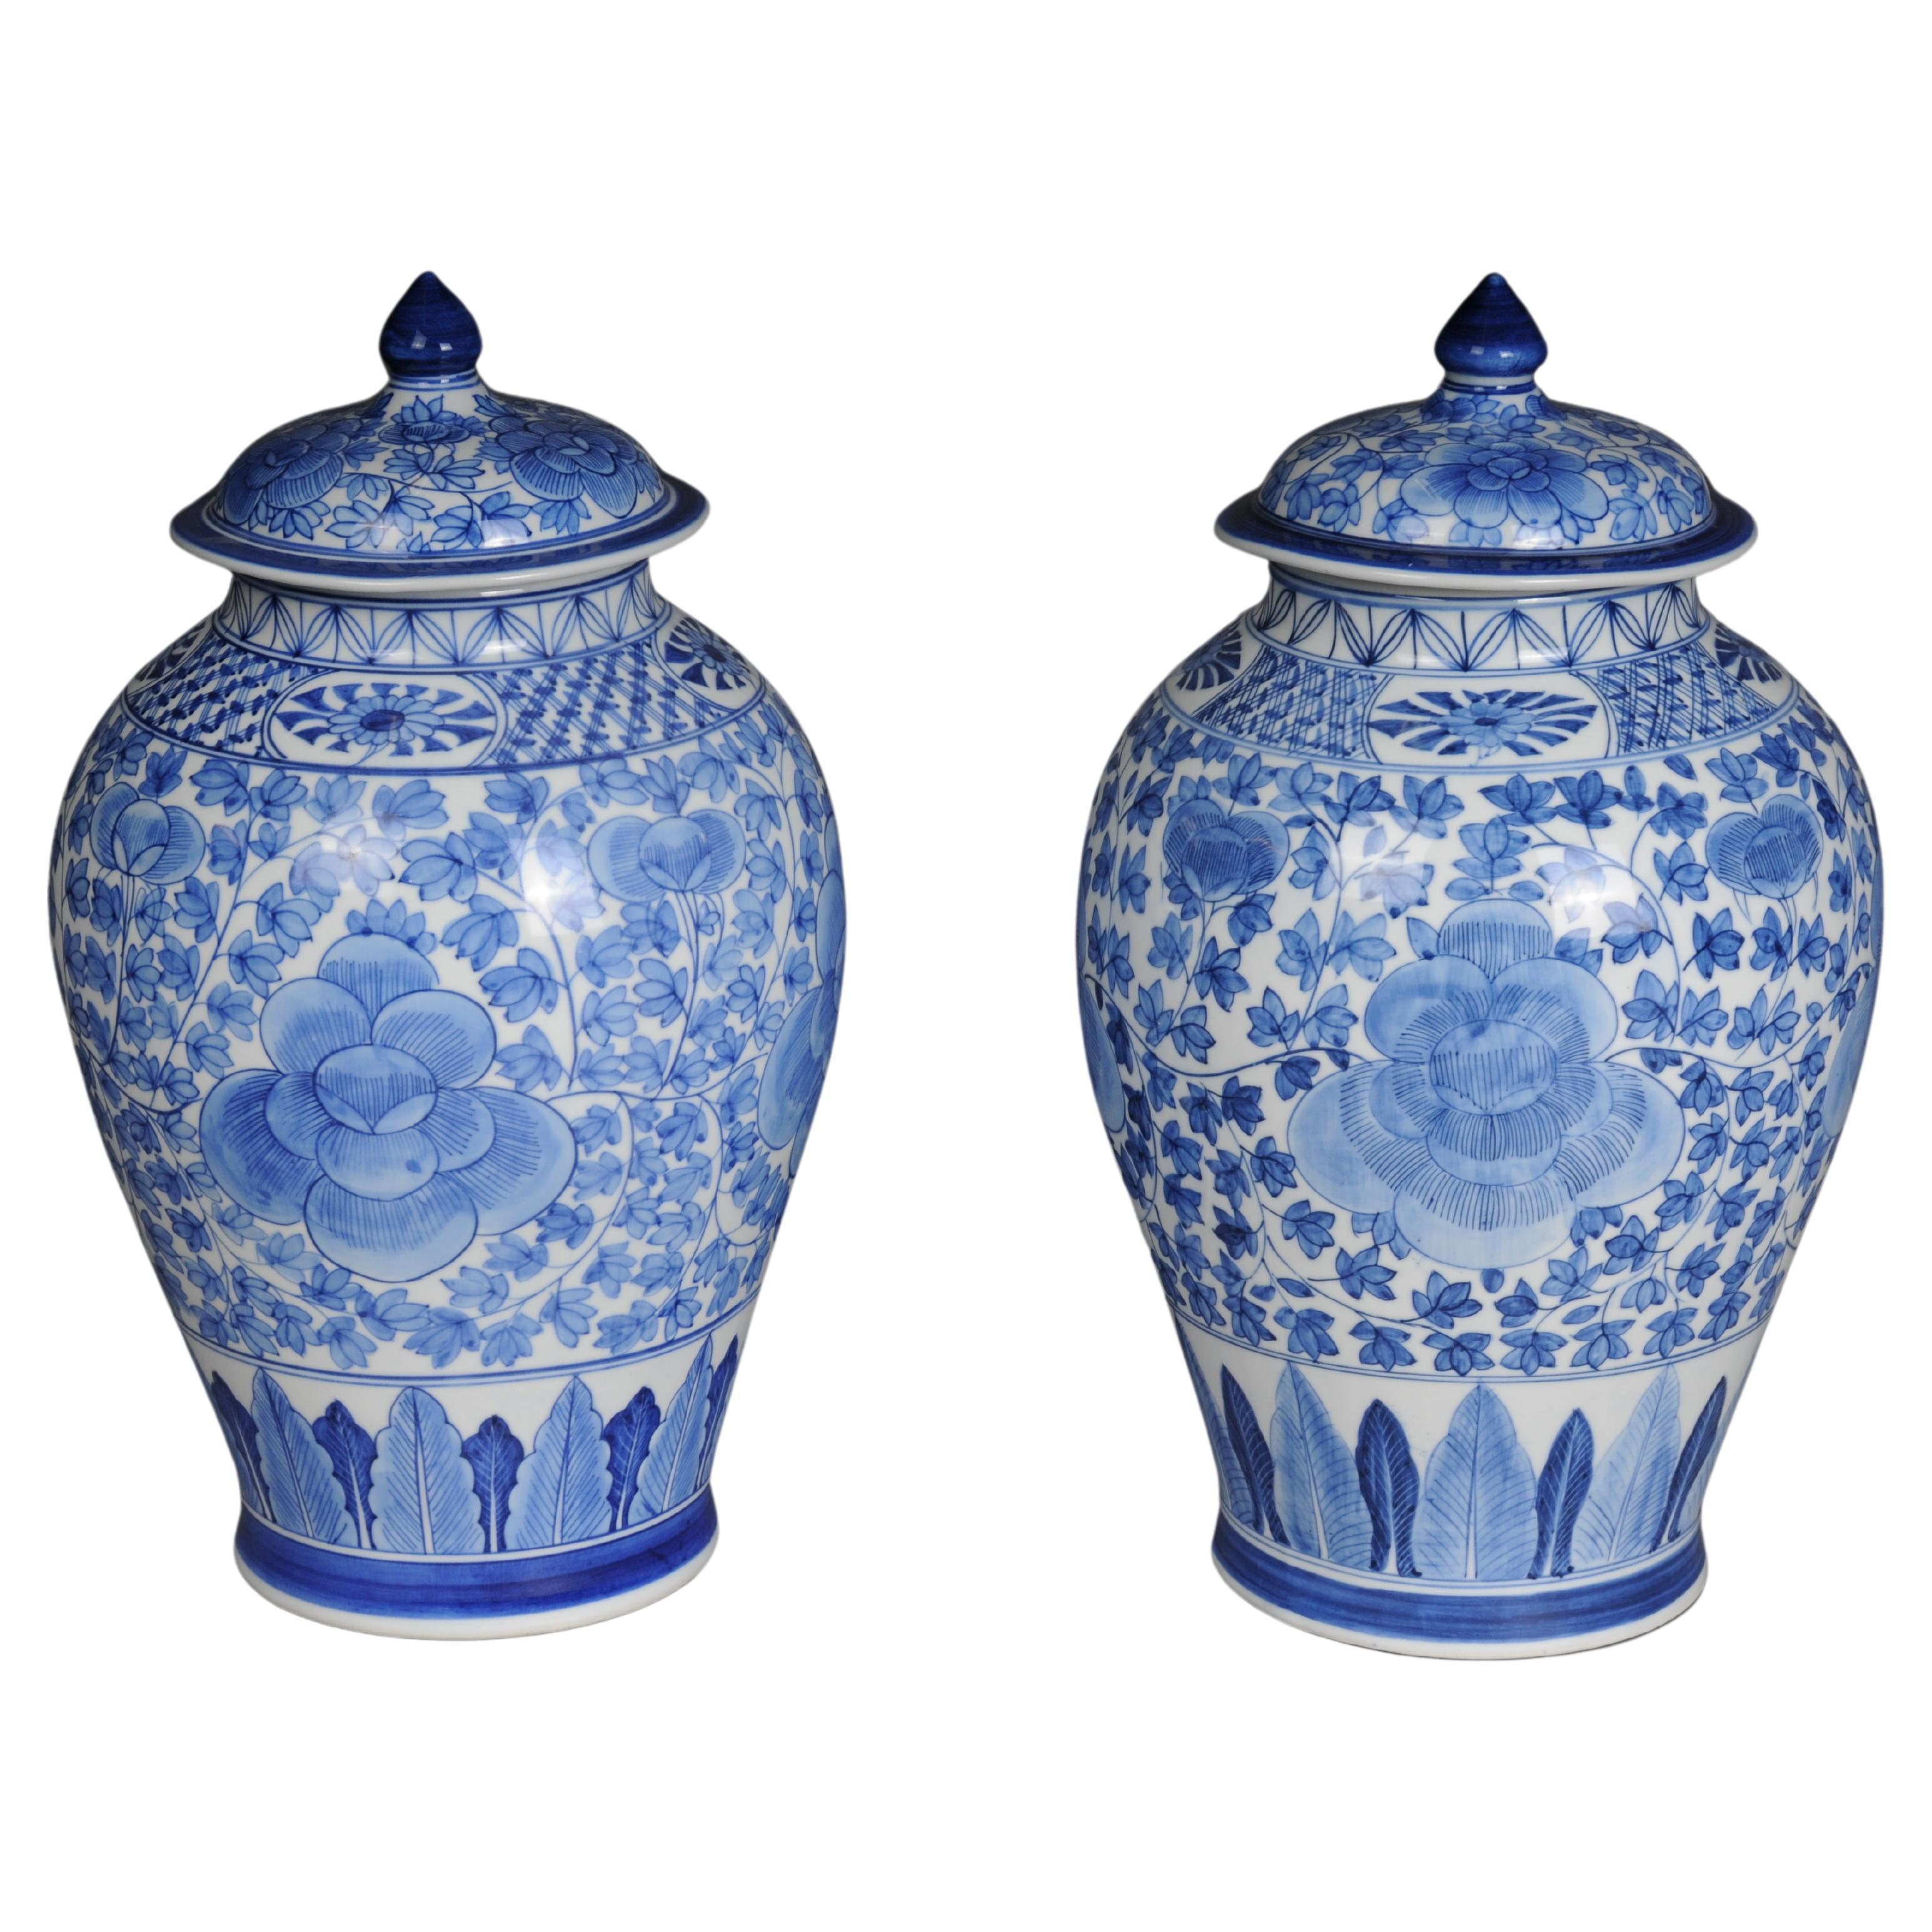 Asiatische Vasen mit Deckel, Porzellan, 20. Jahrhundert, Paar.